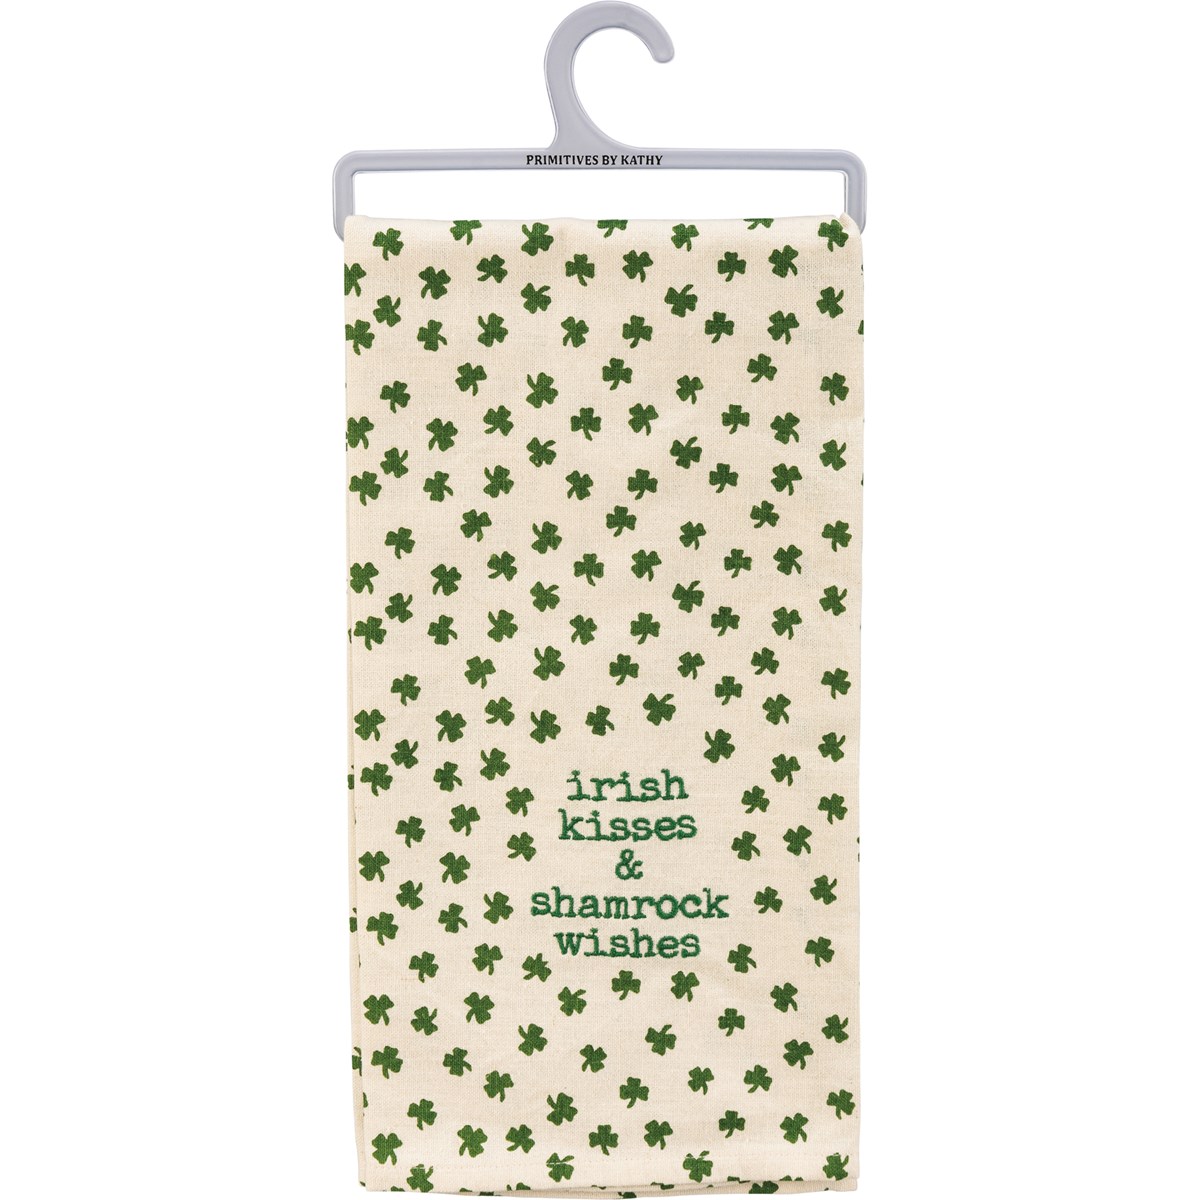 Kitchen Towel - Irish Kisses & Shamrock Wishes - 20" x 26" - Cotton, Linen